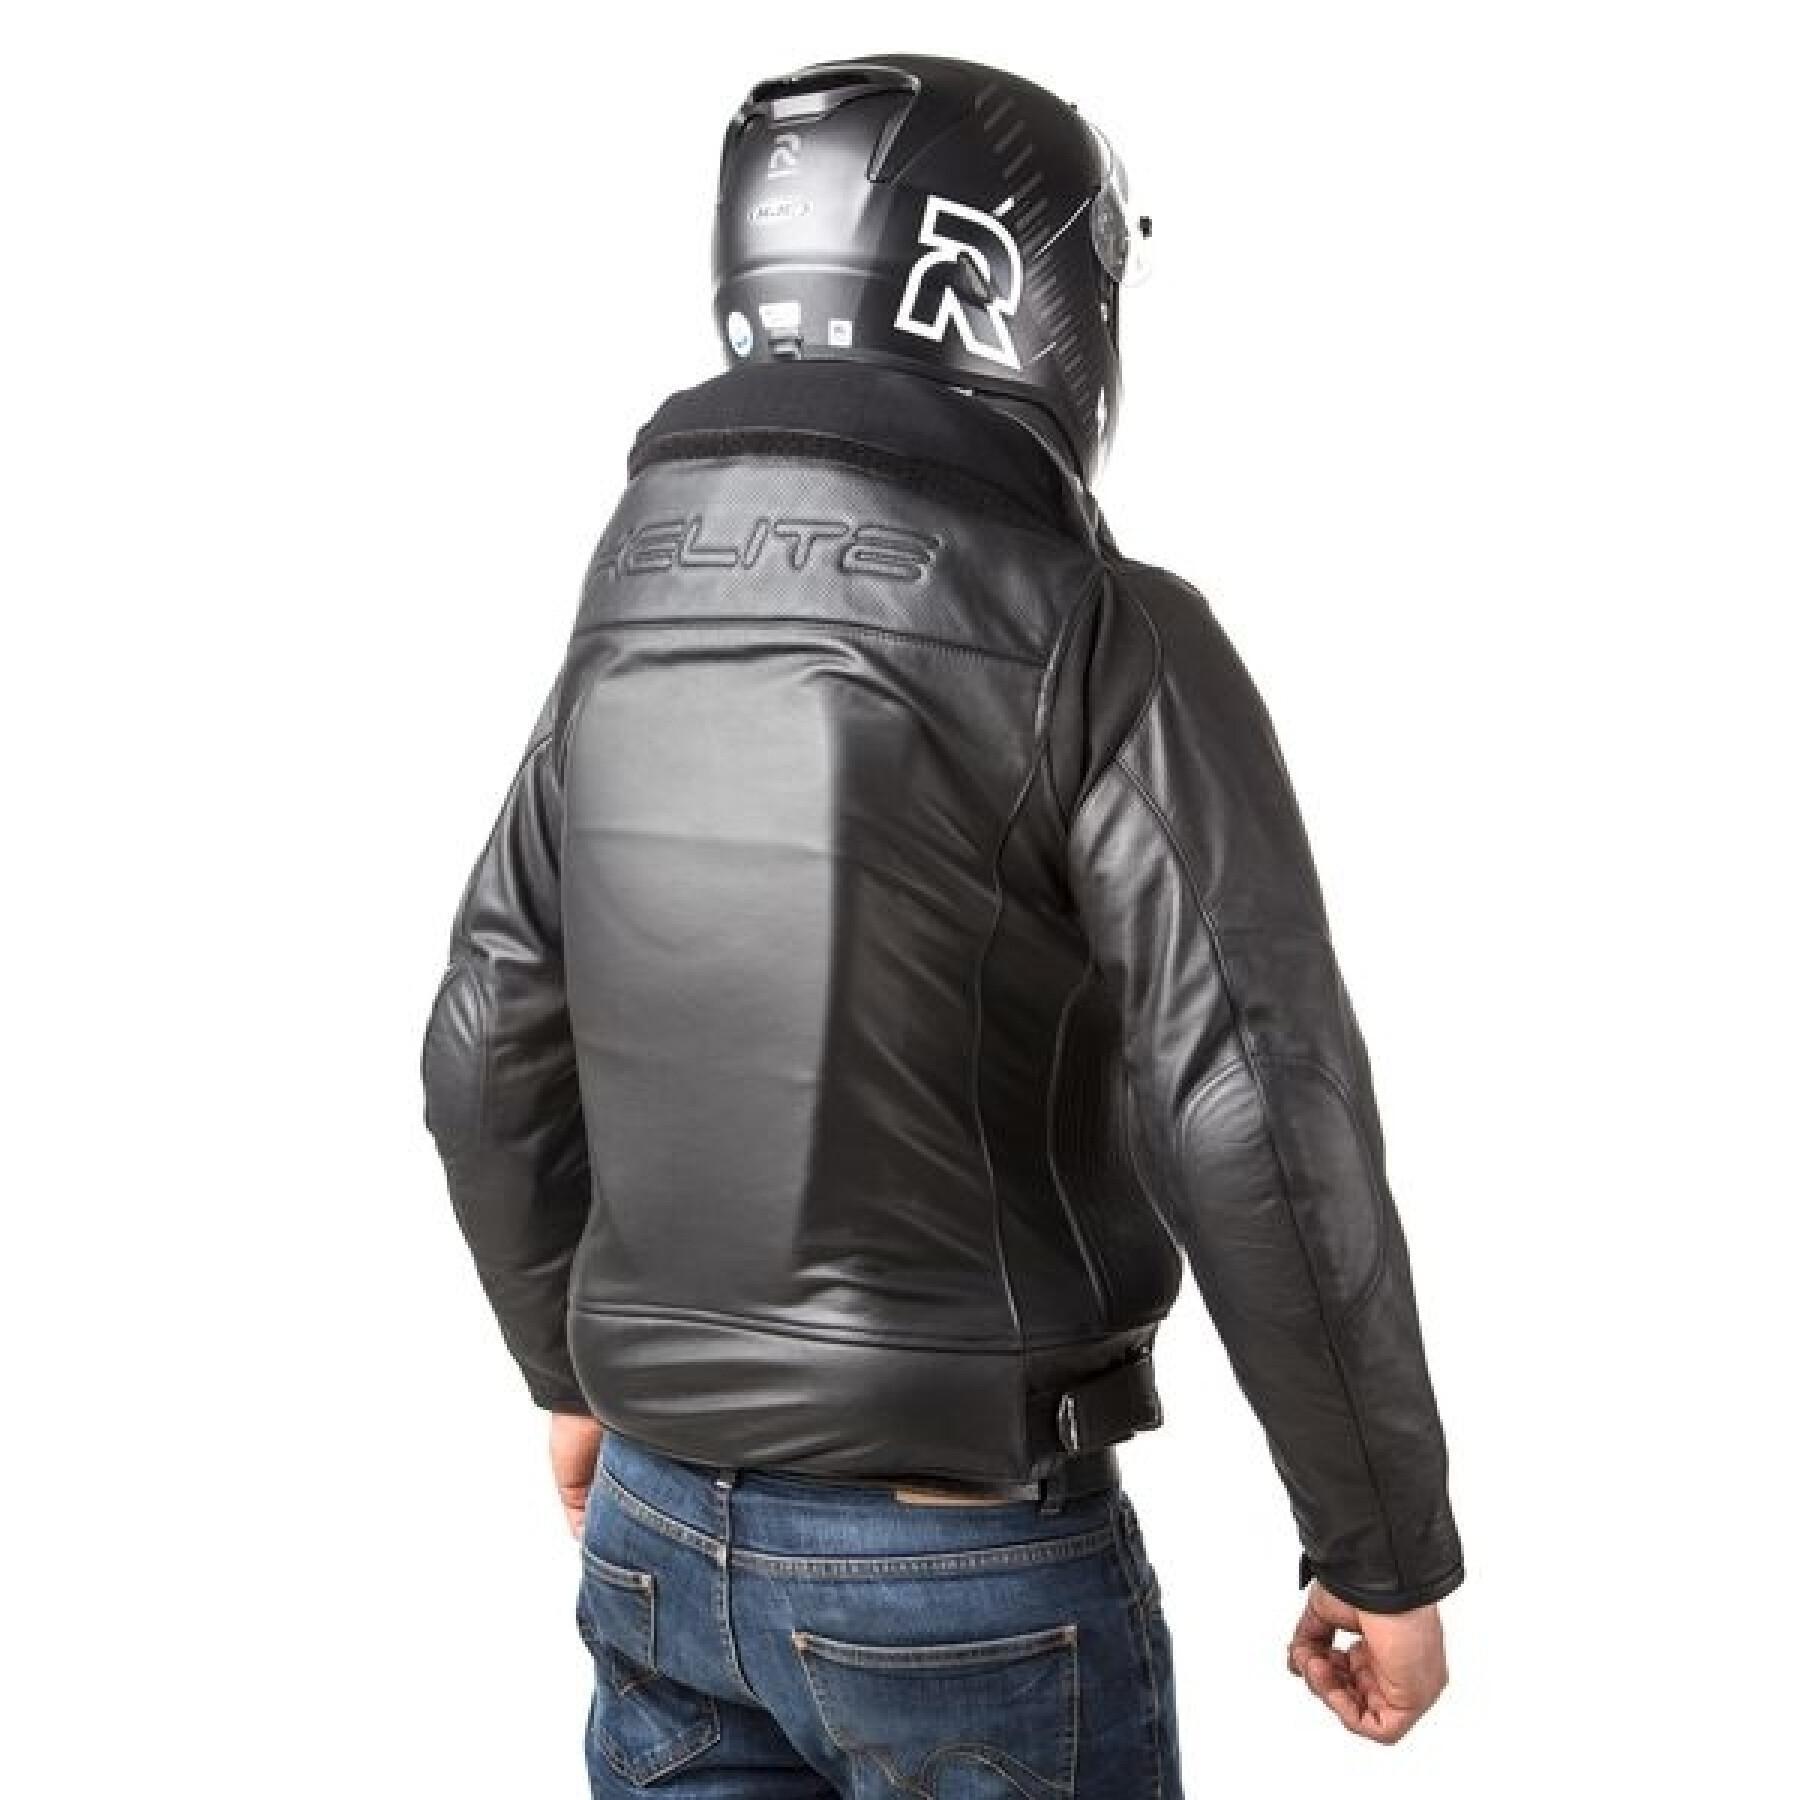 Motorcycle leather jacket airbag Helite ROADSTER